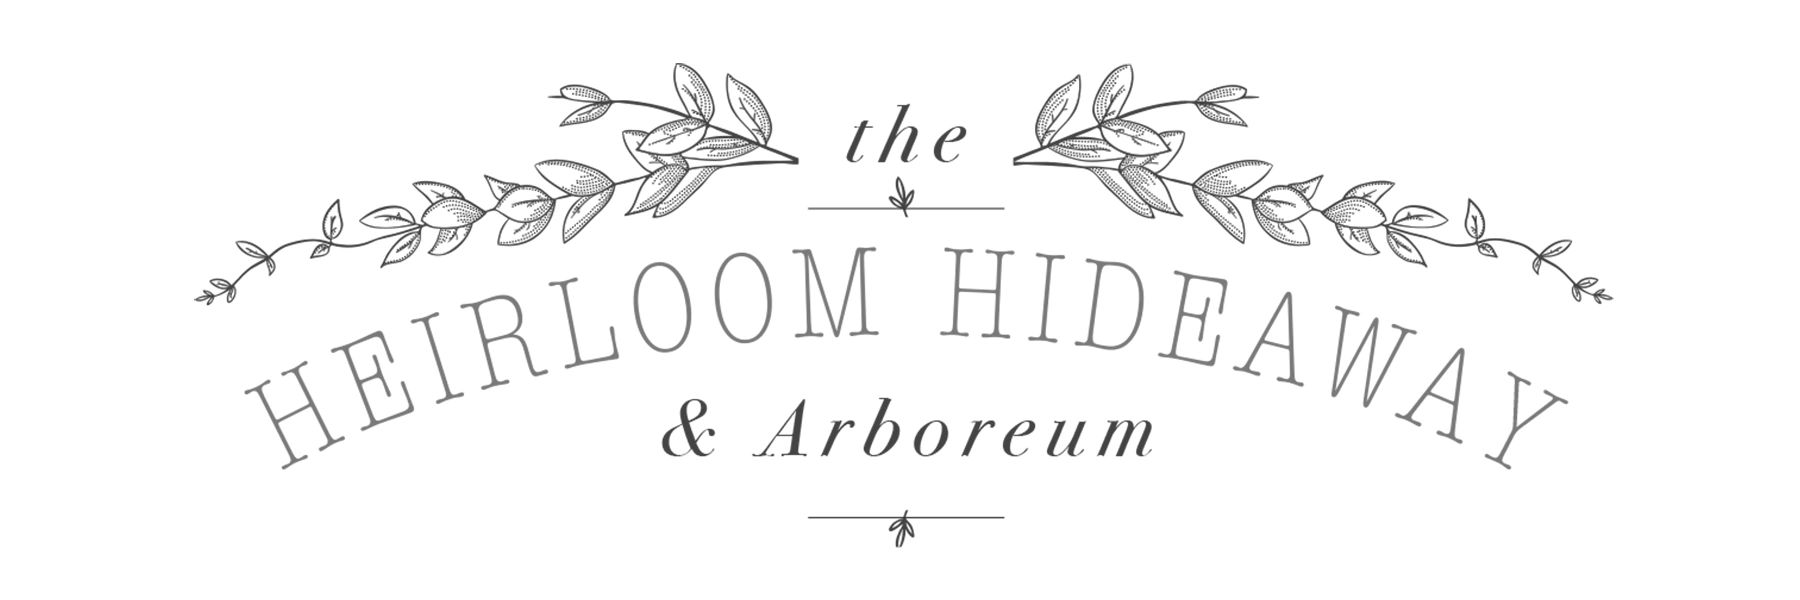 The Heirloom Hideaway & Arboreum logo,  unique venue for special events, small weddings, elopements 